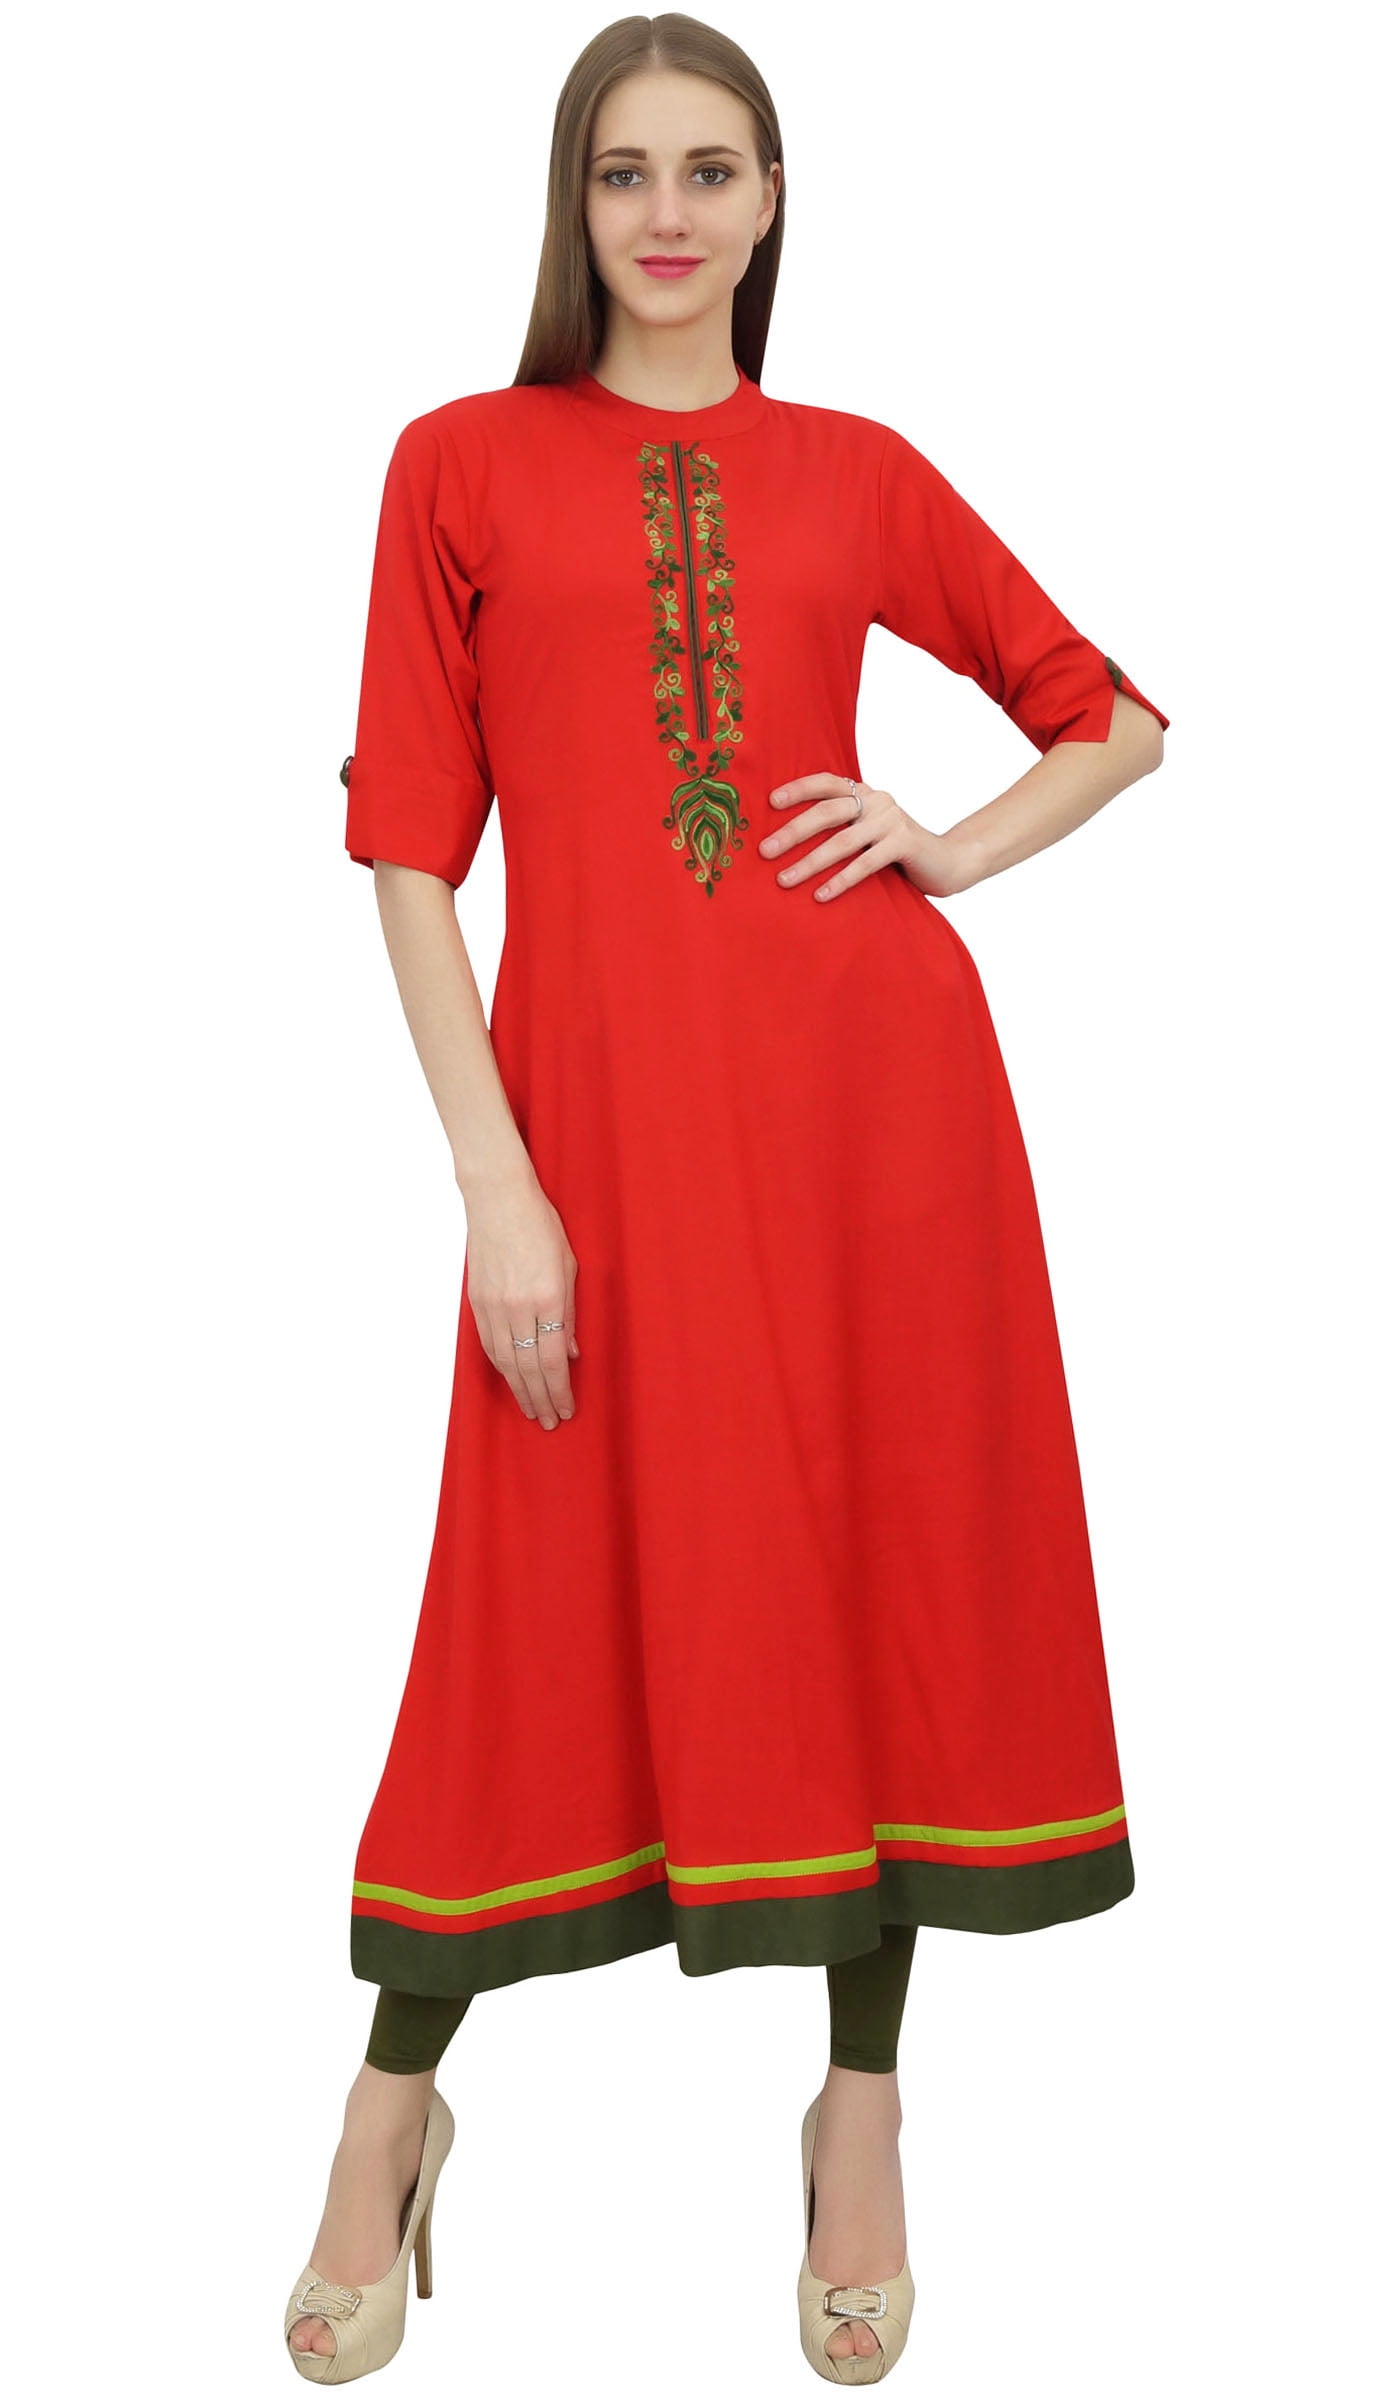 Ethnic Indian Cotton Cerulean Top Kurti Kurta Kurthi Dress Pleated Wood buttons 